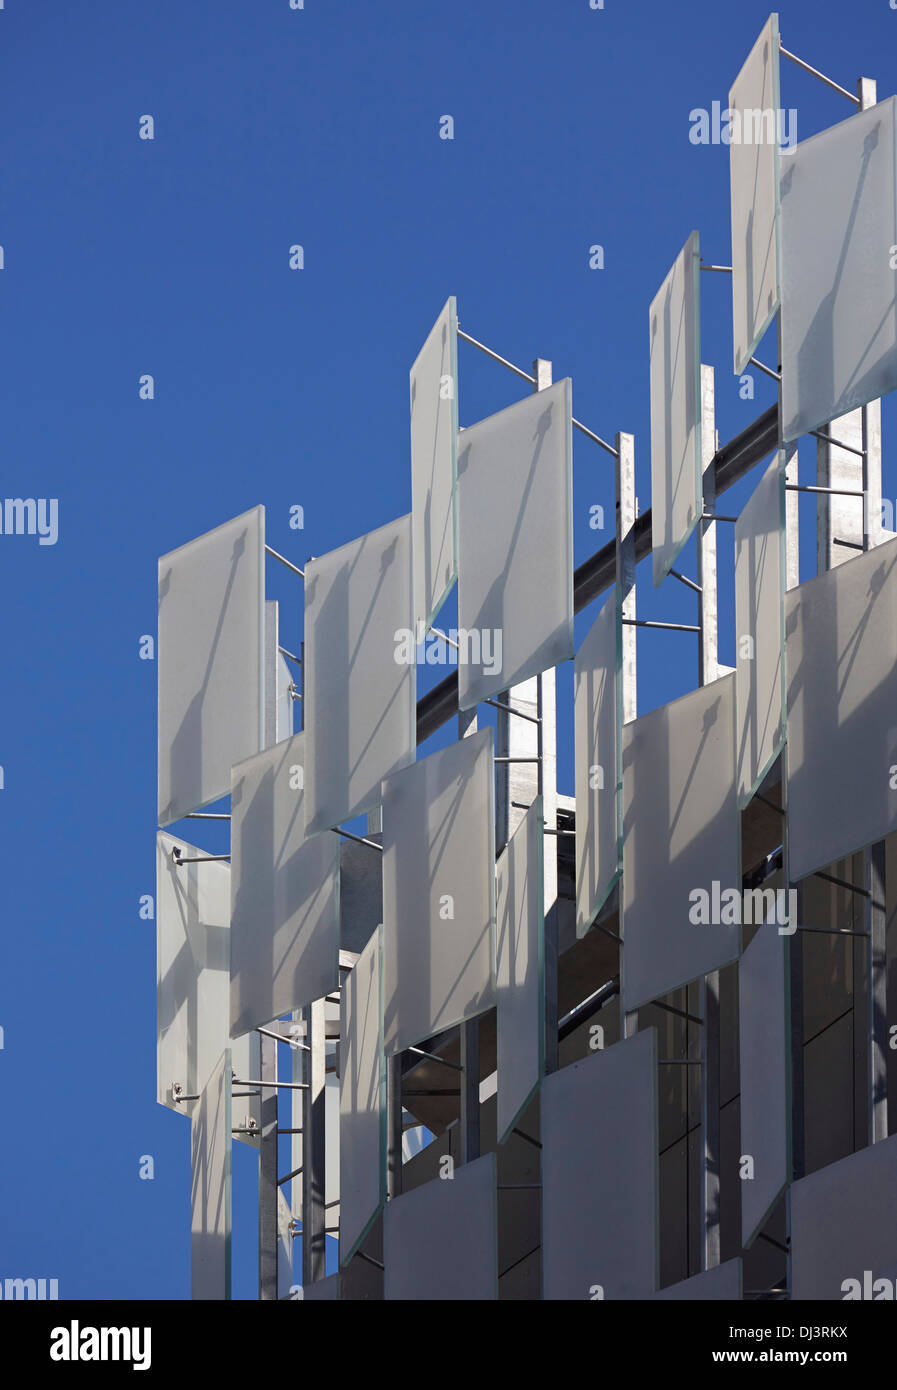 FRAC, Marseille, France. Architect: Kengo Kuma, 2013. Facade detail. Stock Photo